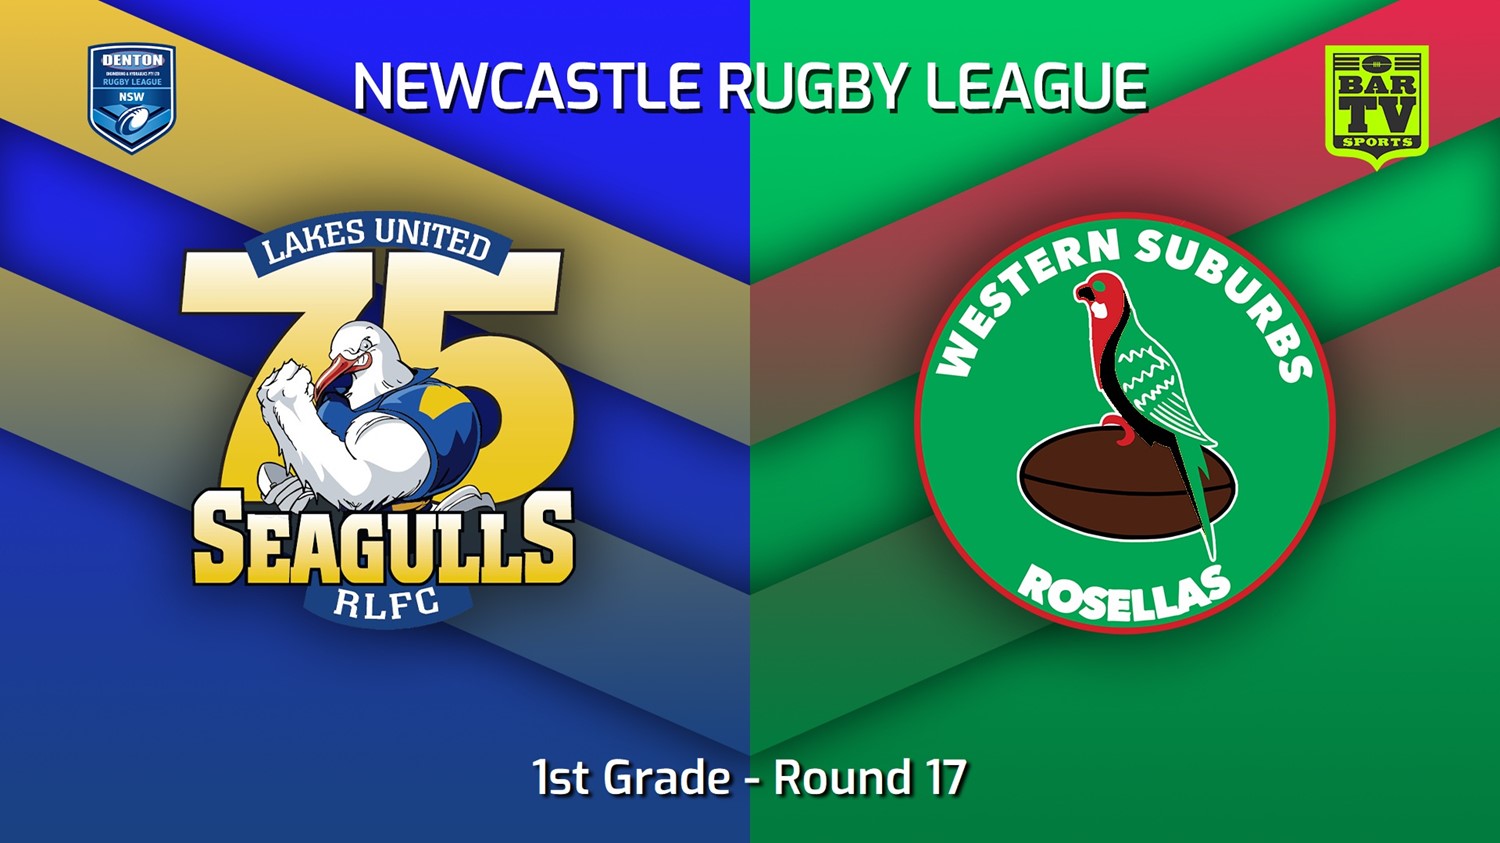 220730-Newcastle Round 17 - 1st Grade - Lakes United v Western Suburbs Rosellas Minigame Slate Image